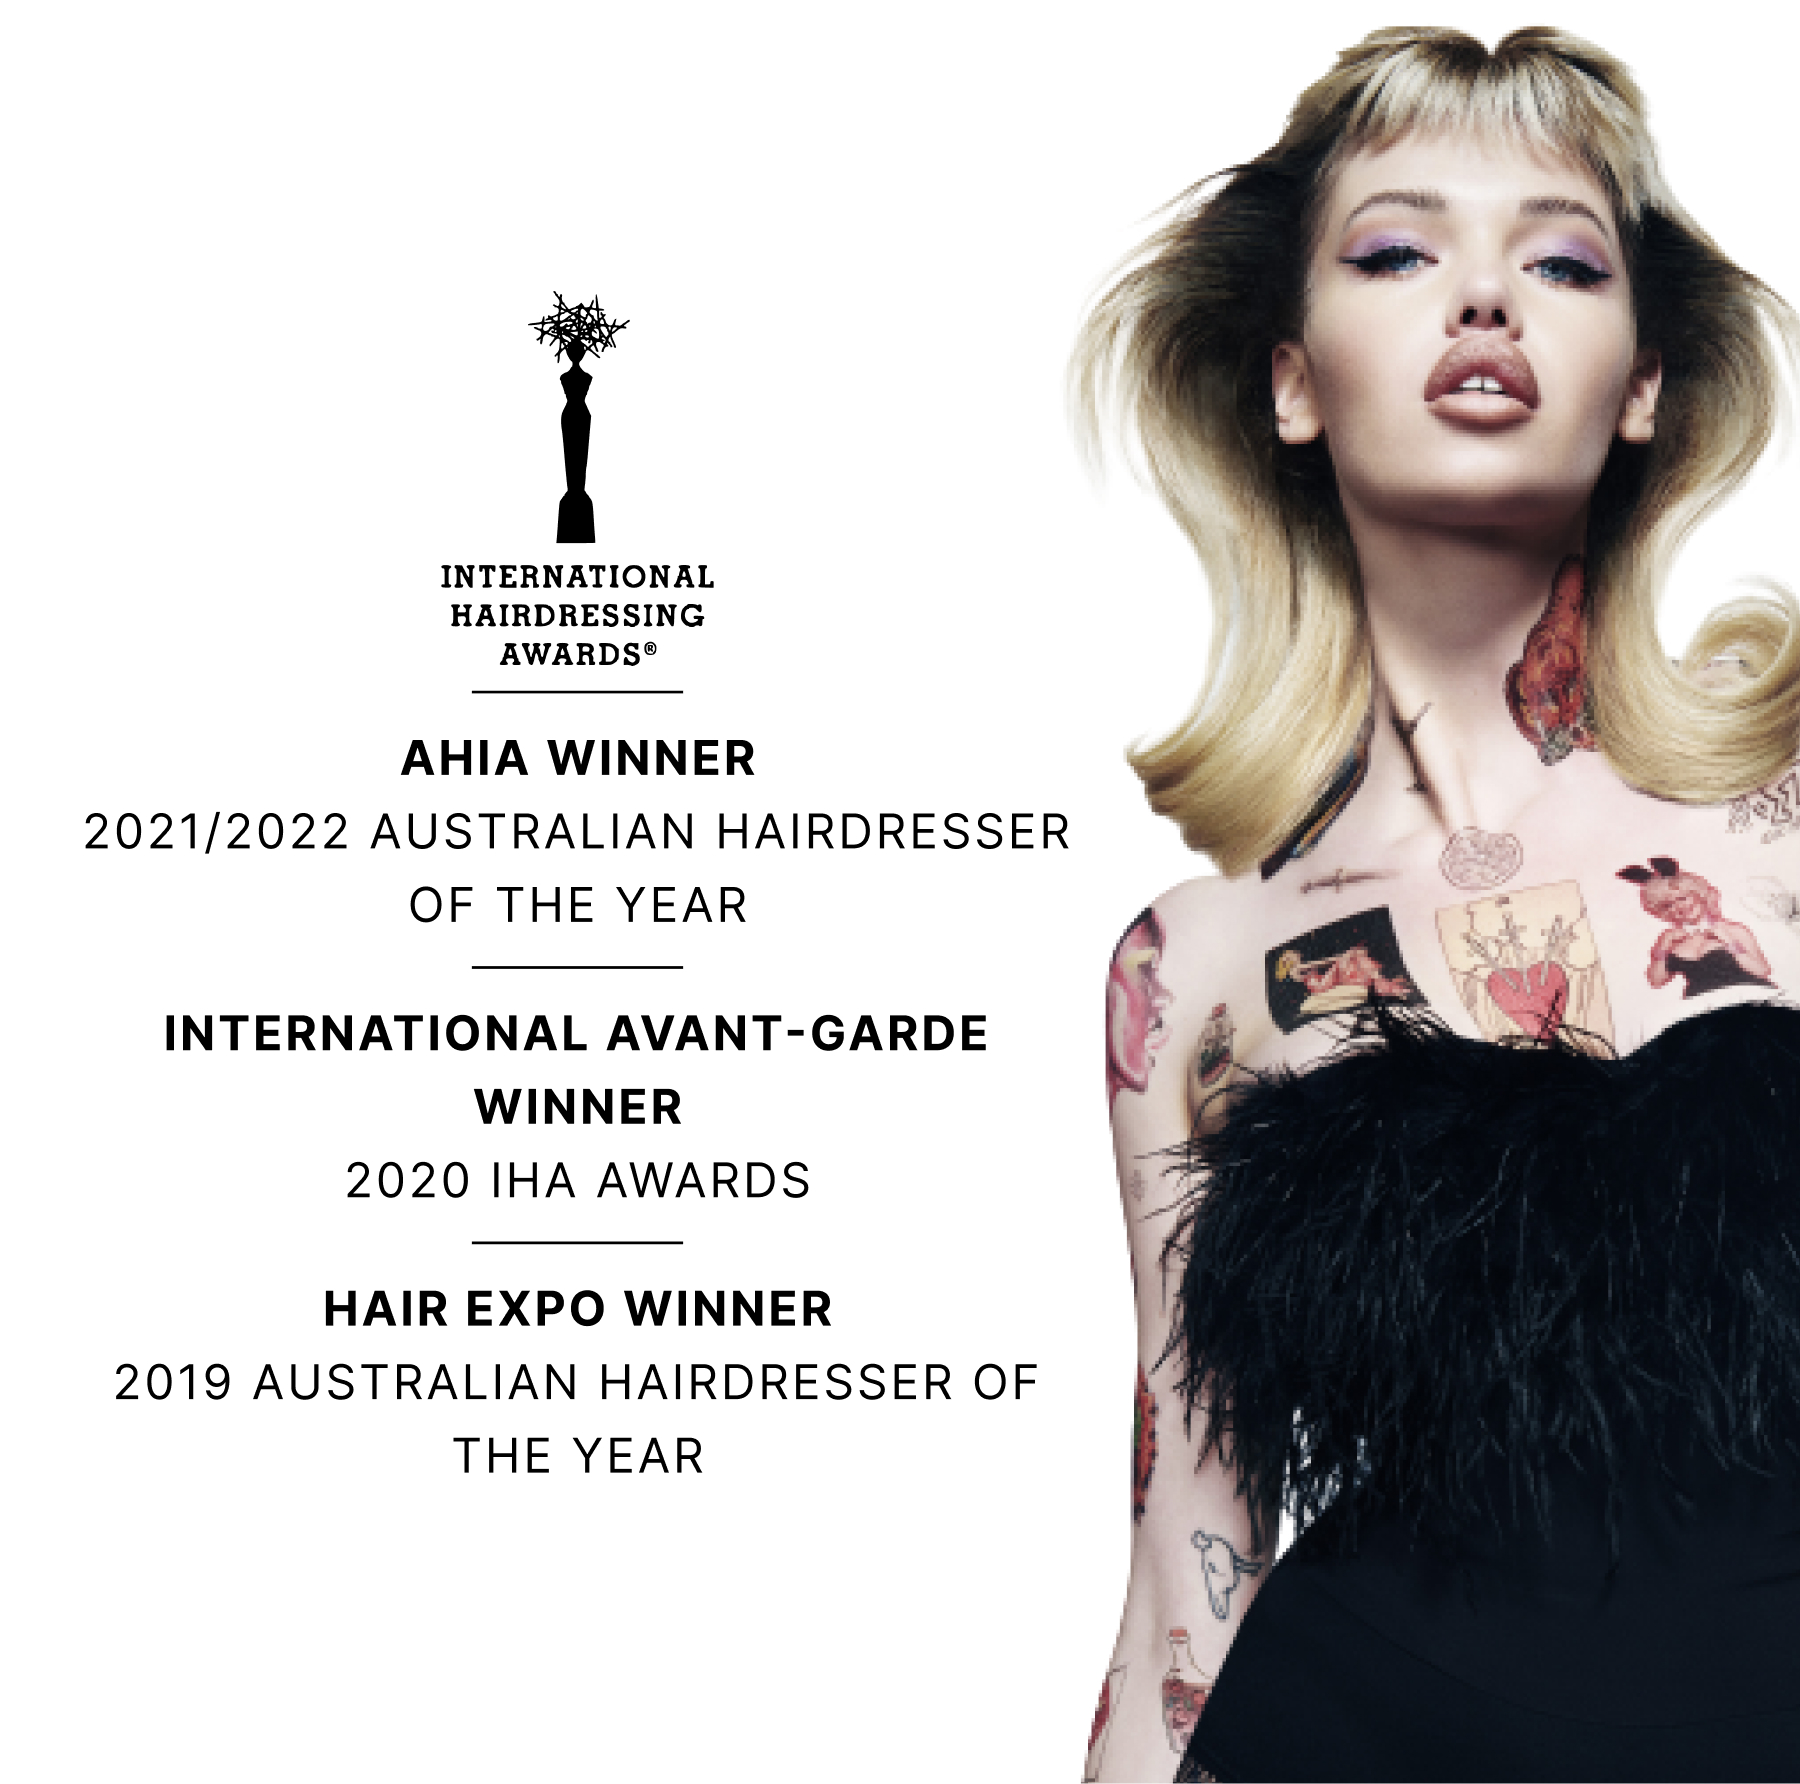 Top Hair Salon Melbourne | Best Hairdressers & Stylist South Yarra, Toorak